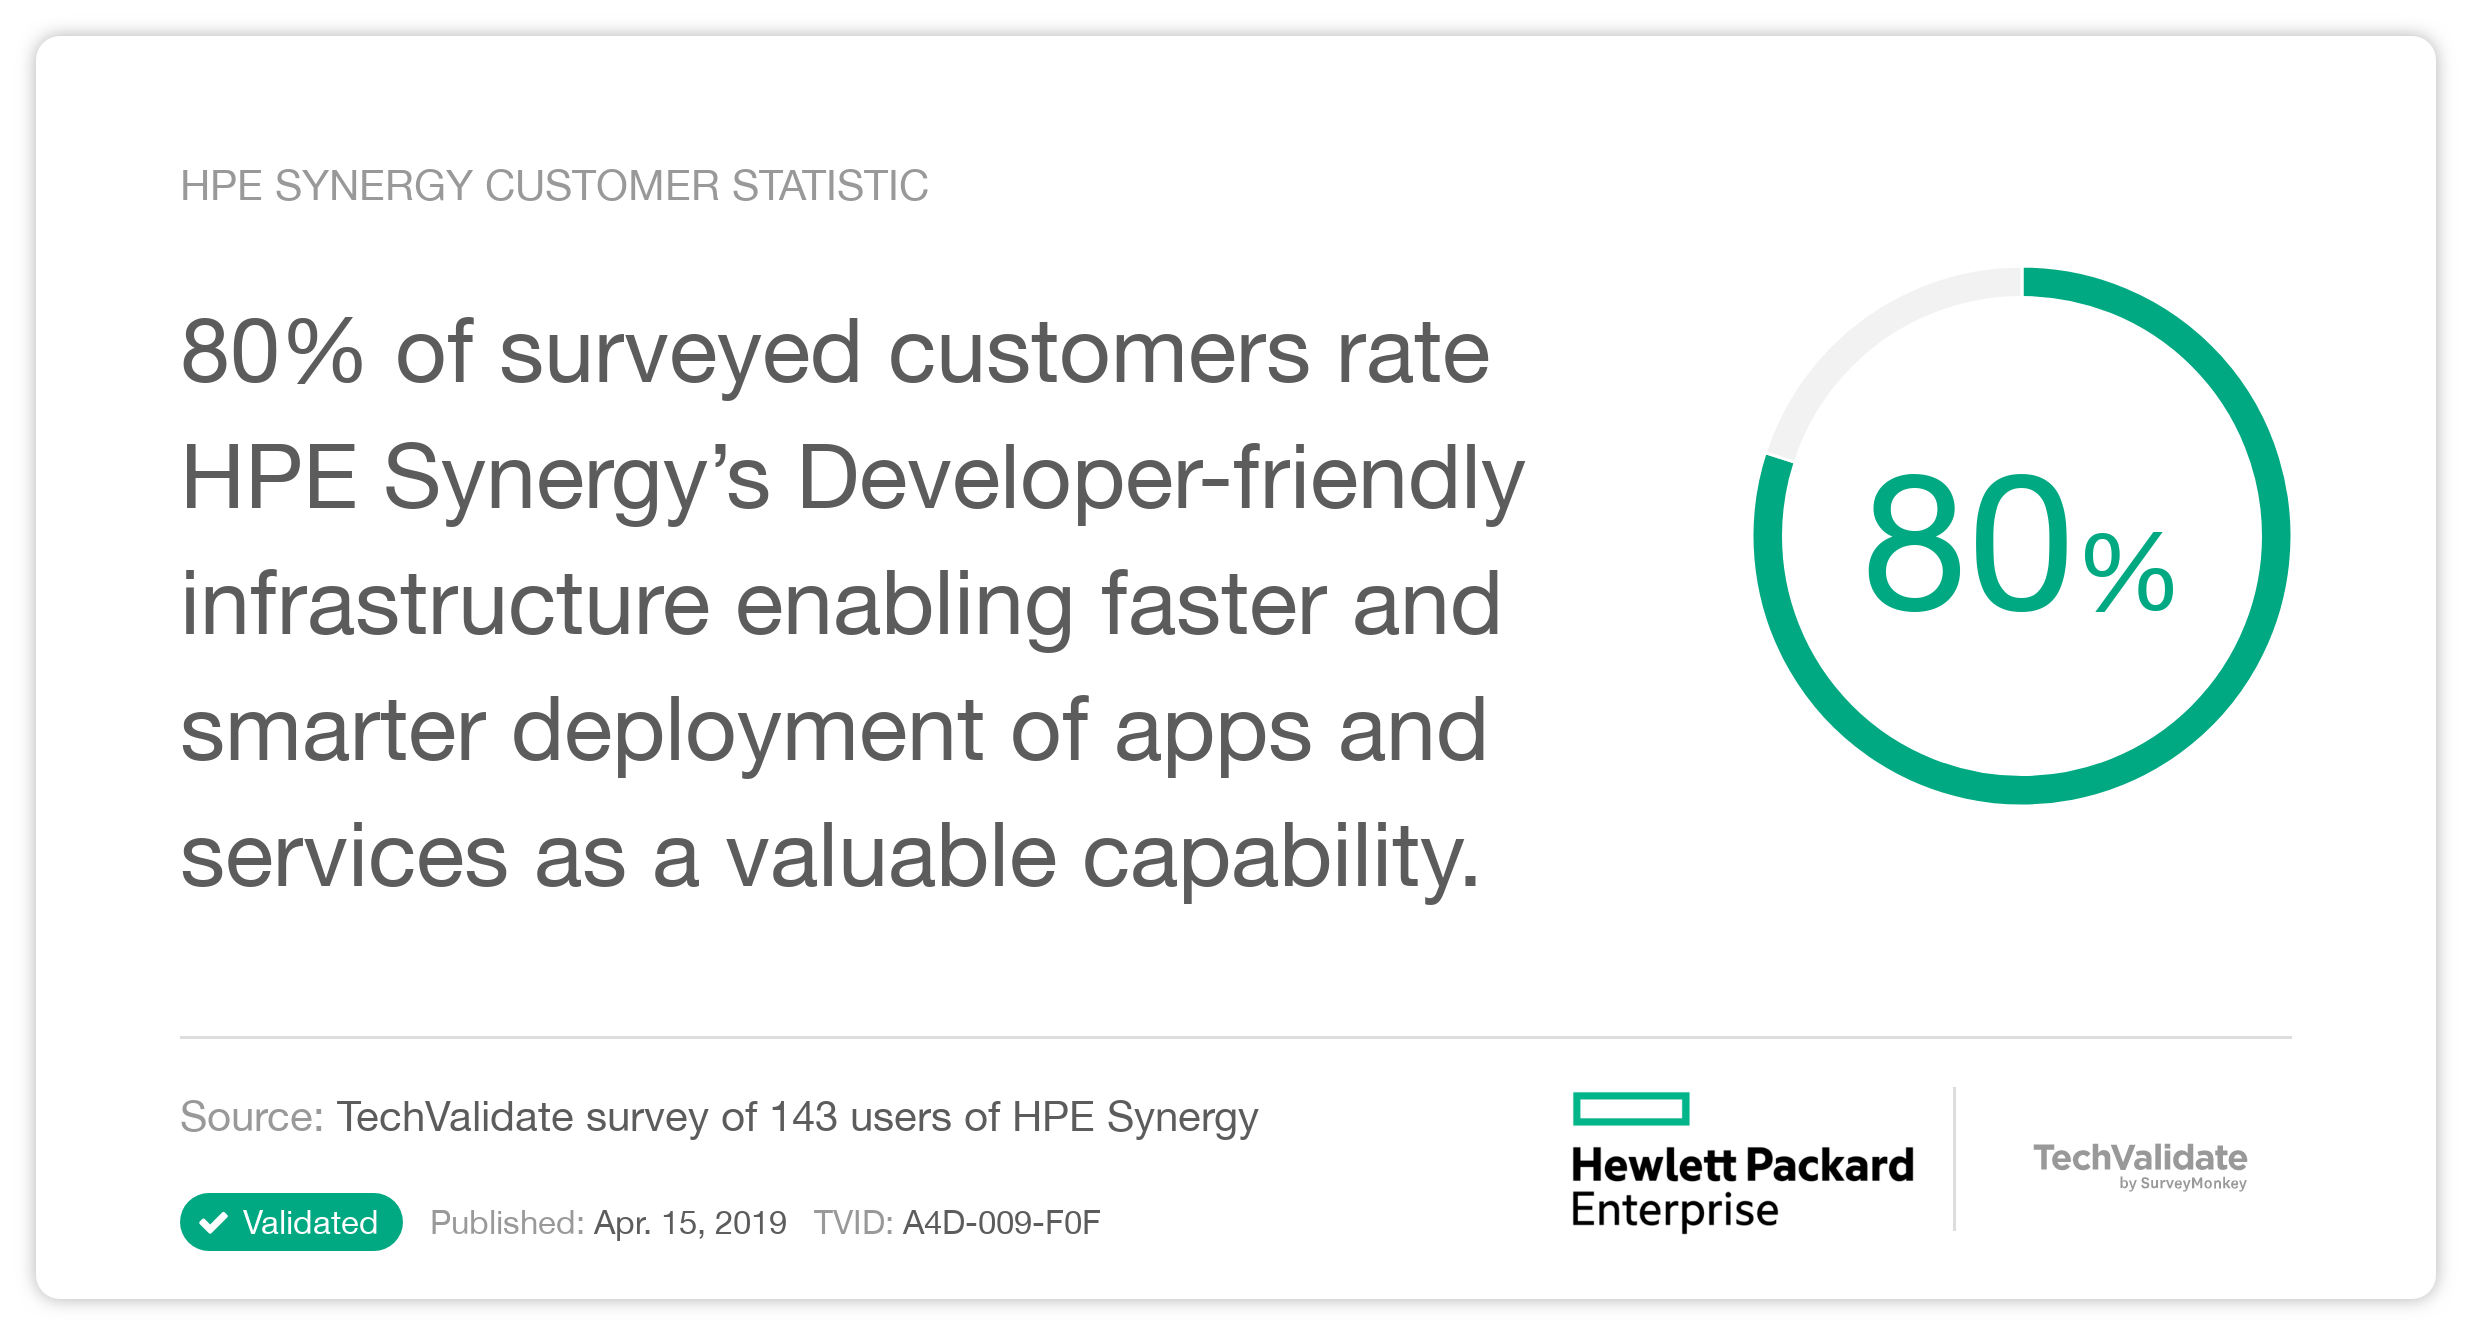 HPE Synergy Customer Statistic